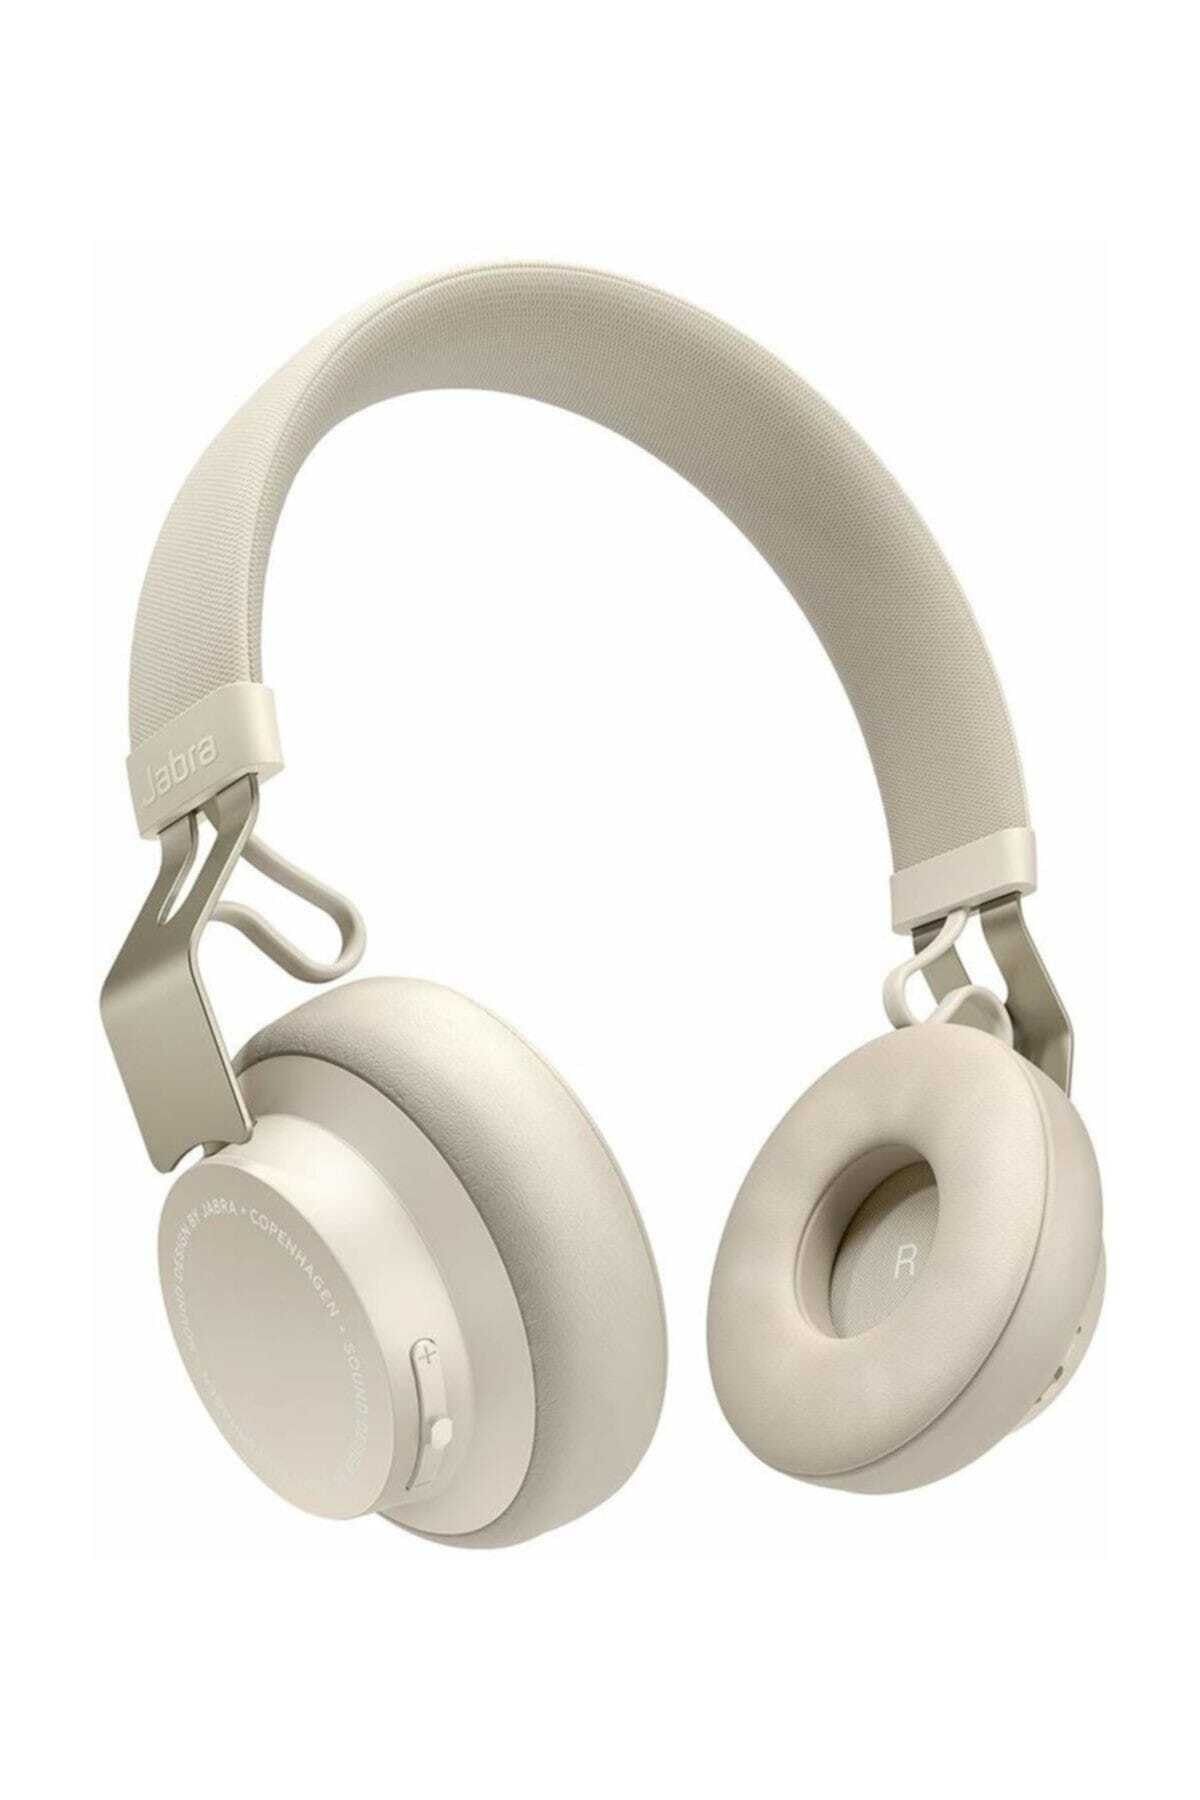 Jabra Move Style Edition Kulaküstü Bluetooth Kulaklık Bej